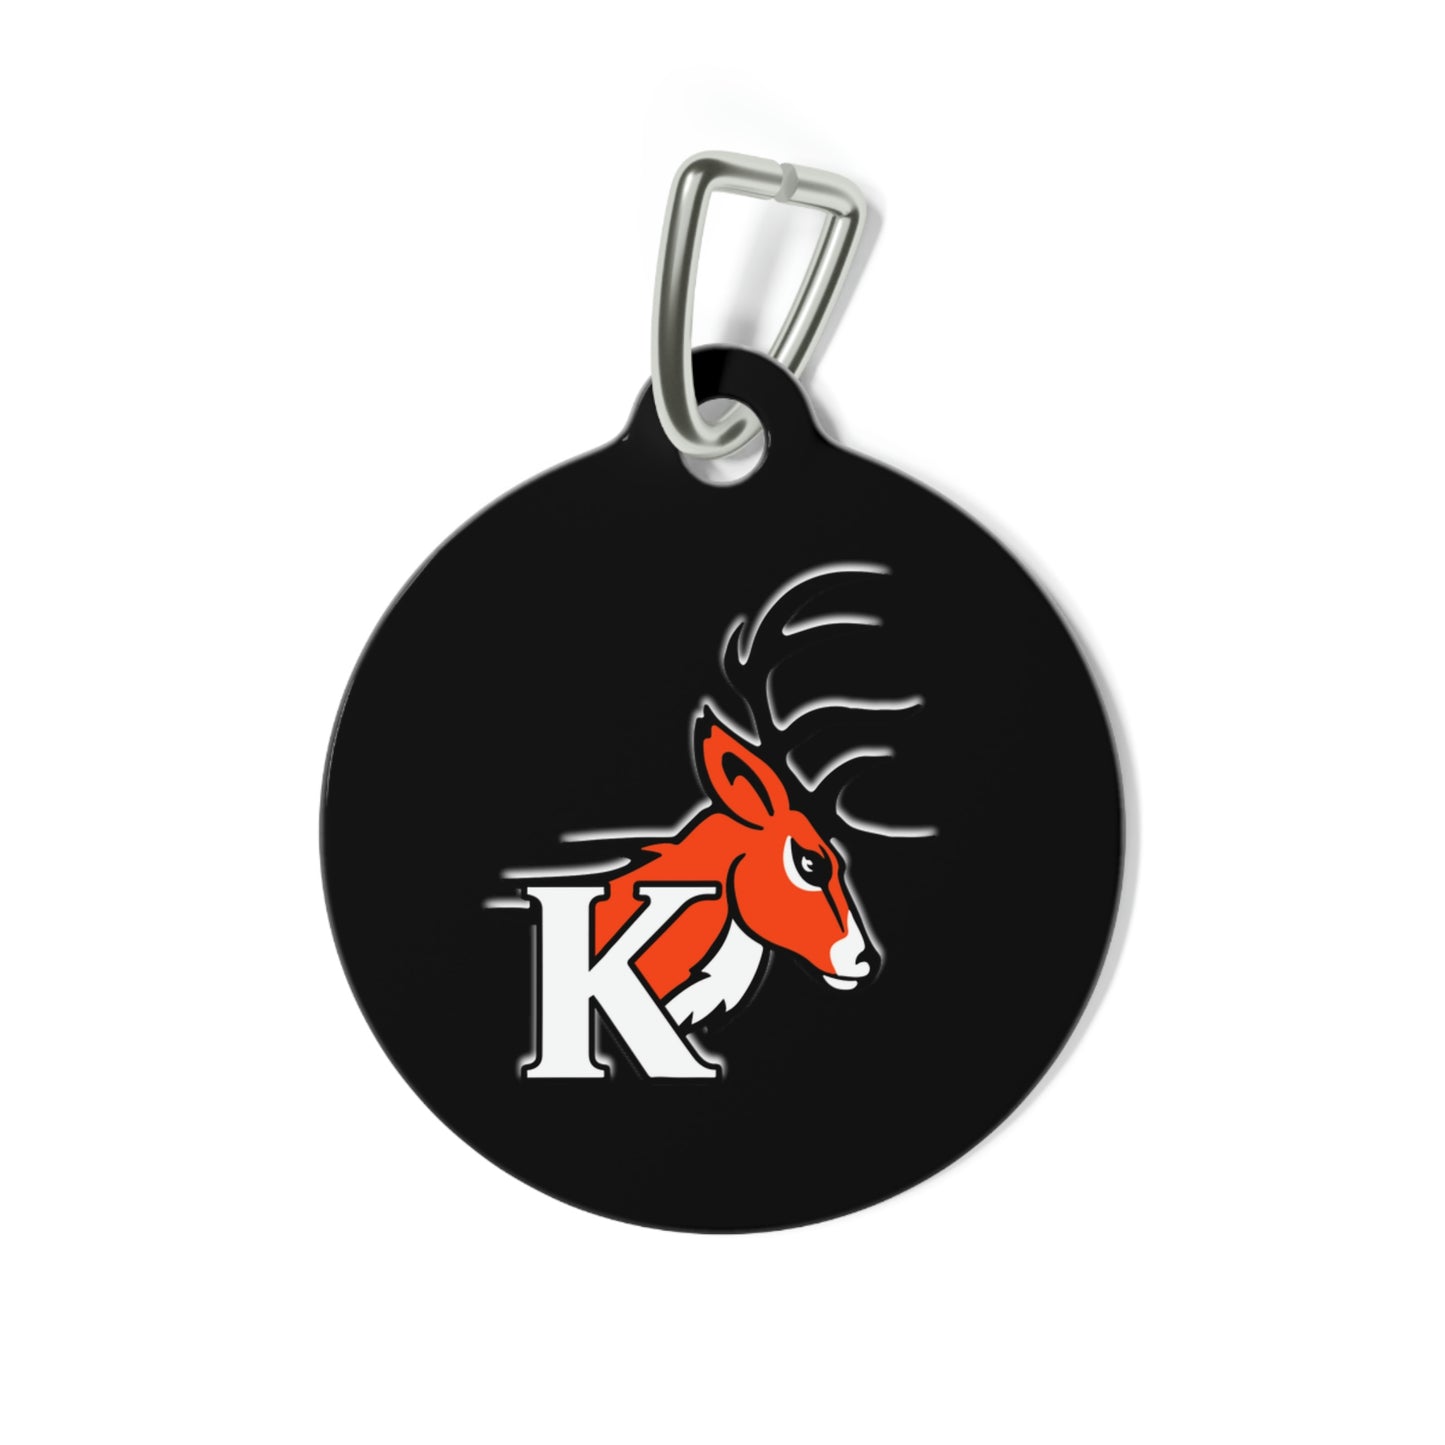 Stags Logo 1 Keychain charm #M09-01C Black